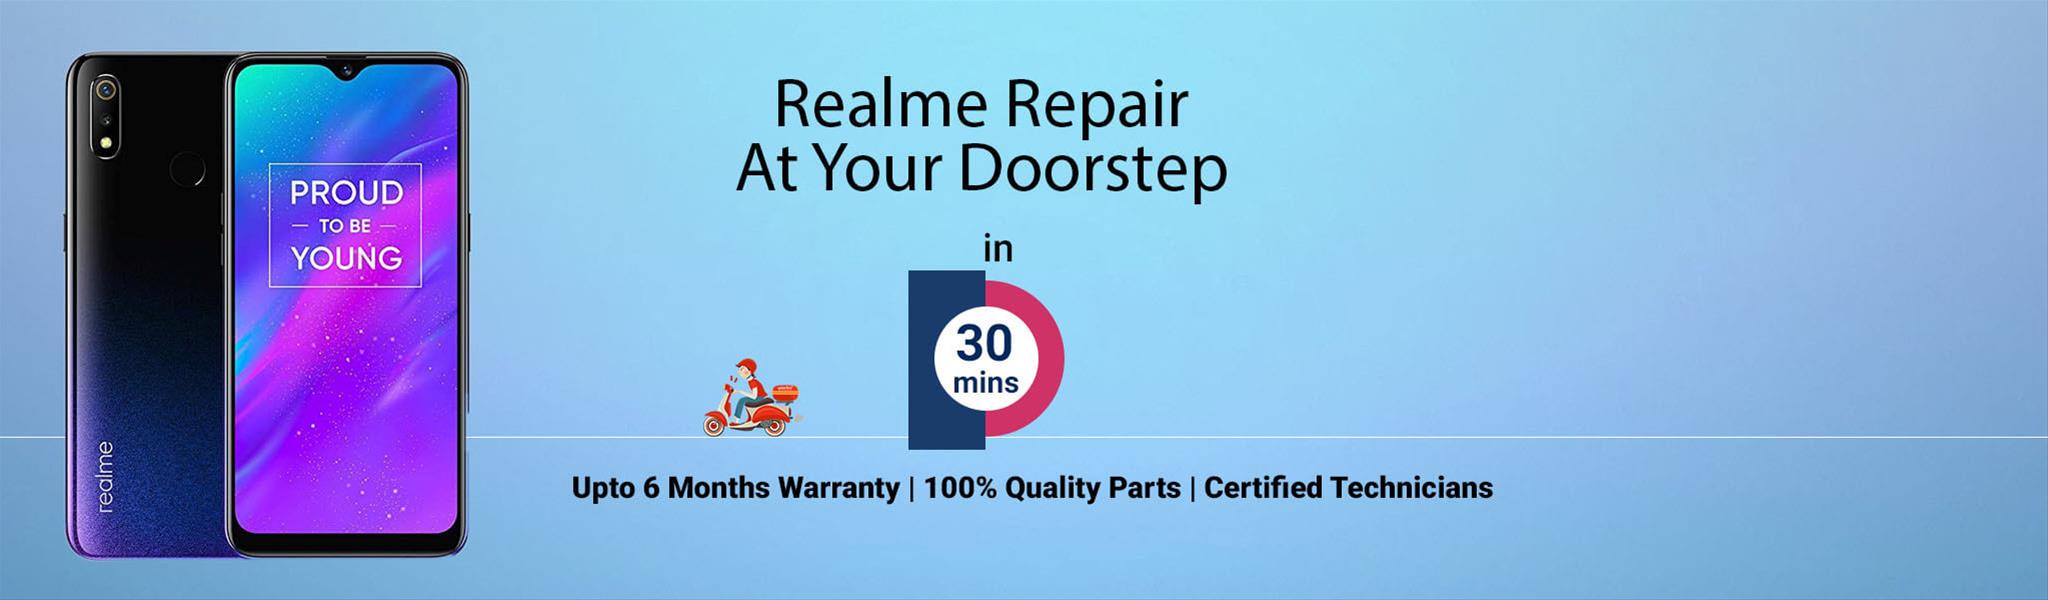 realme-repair-service-banner-delhi.jpg